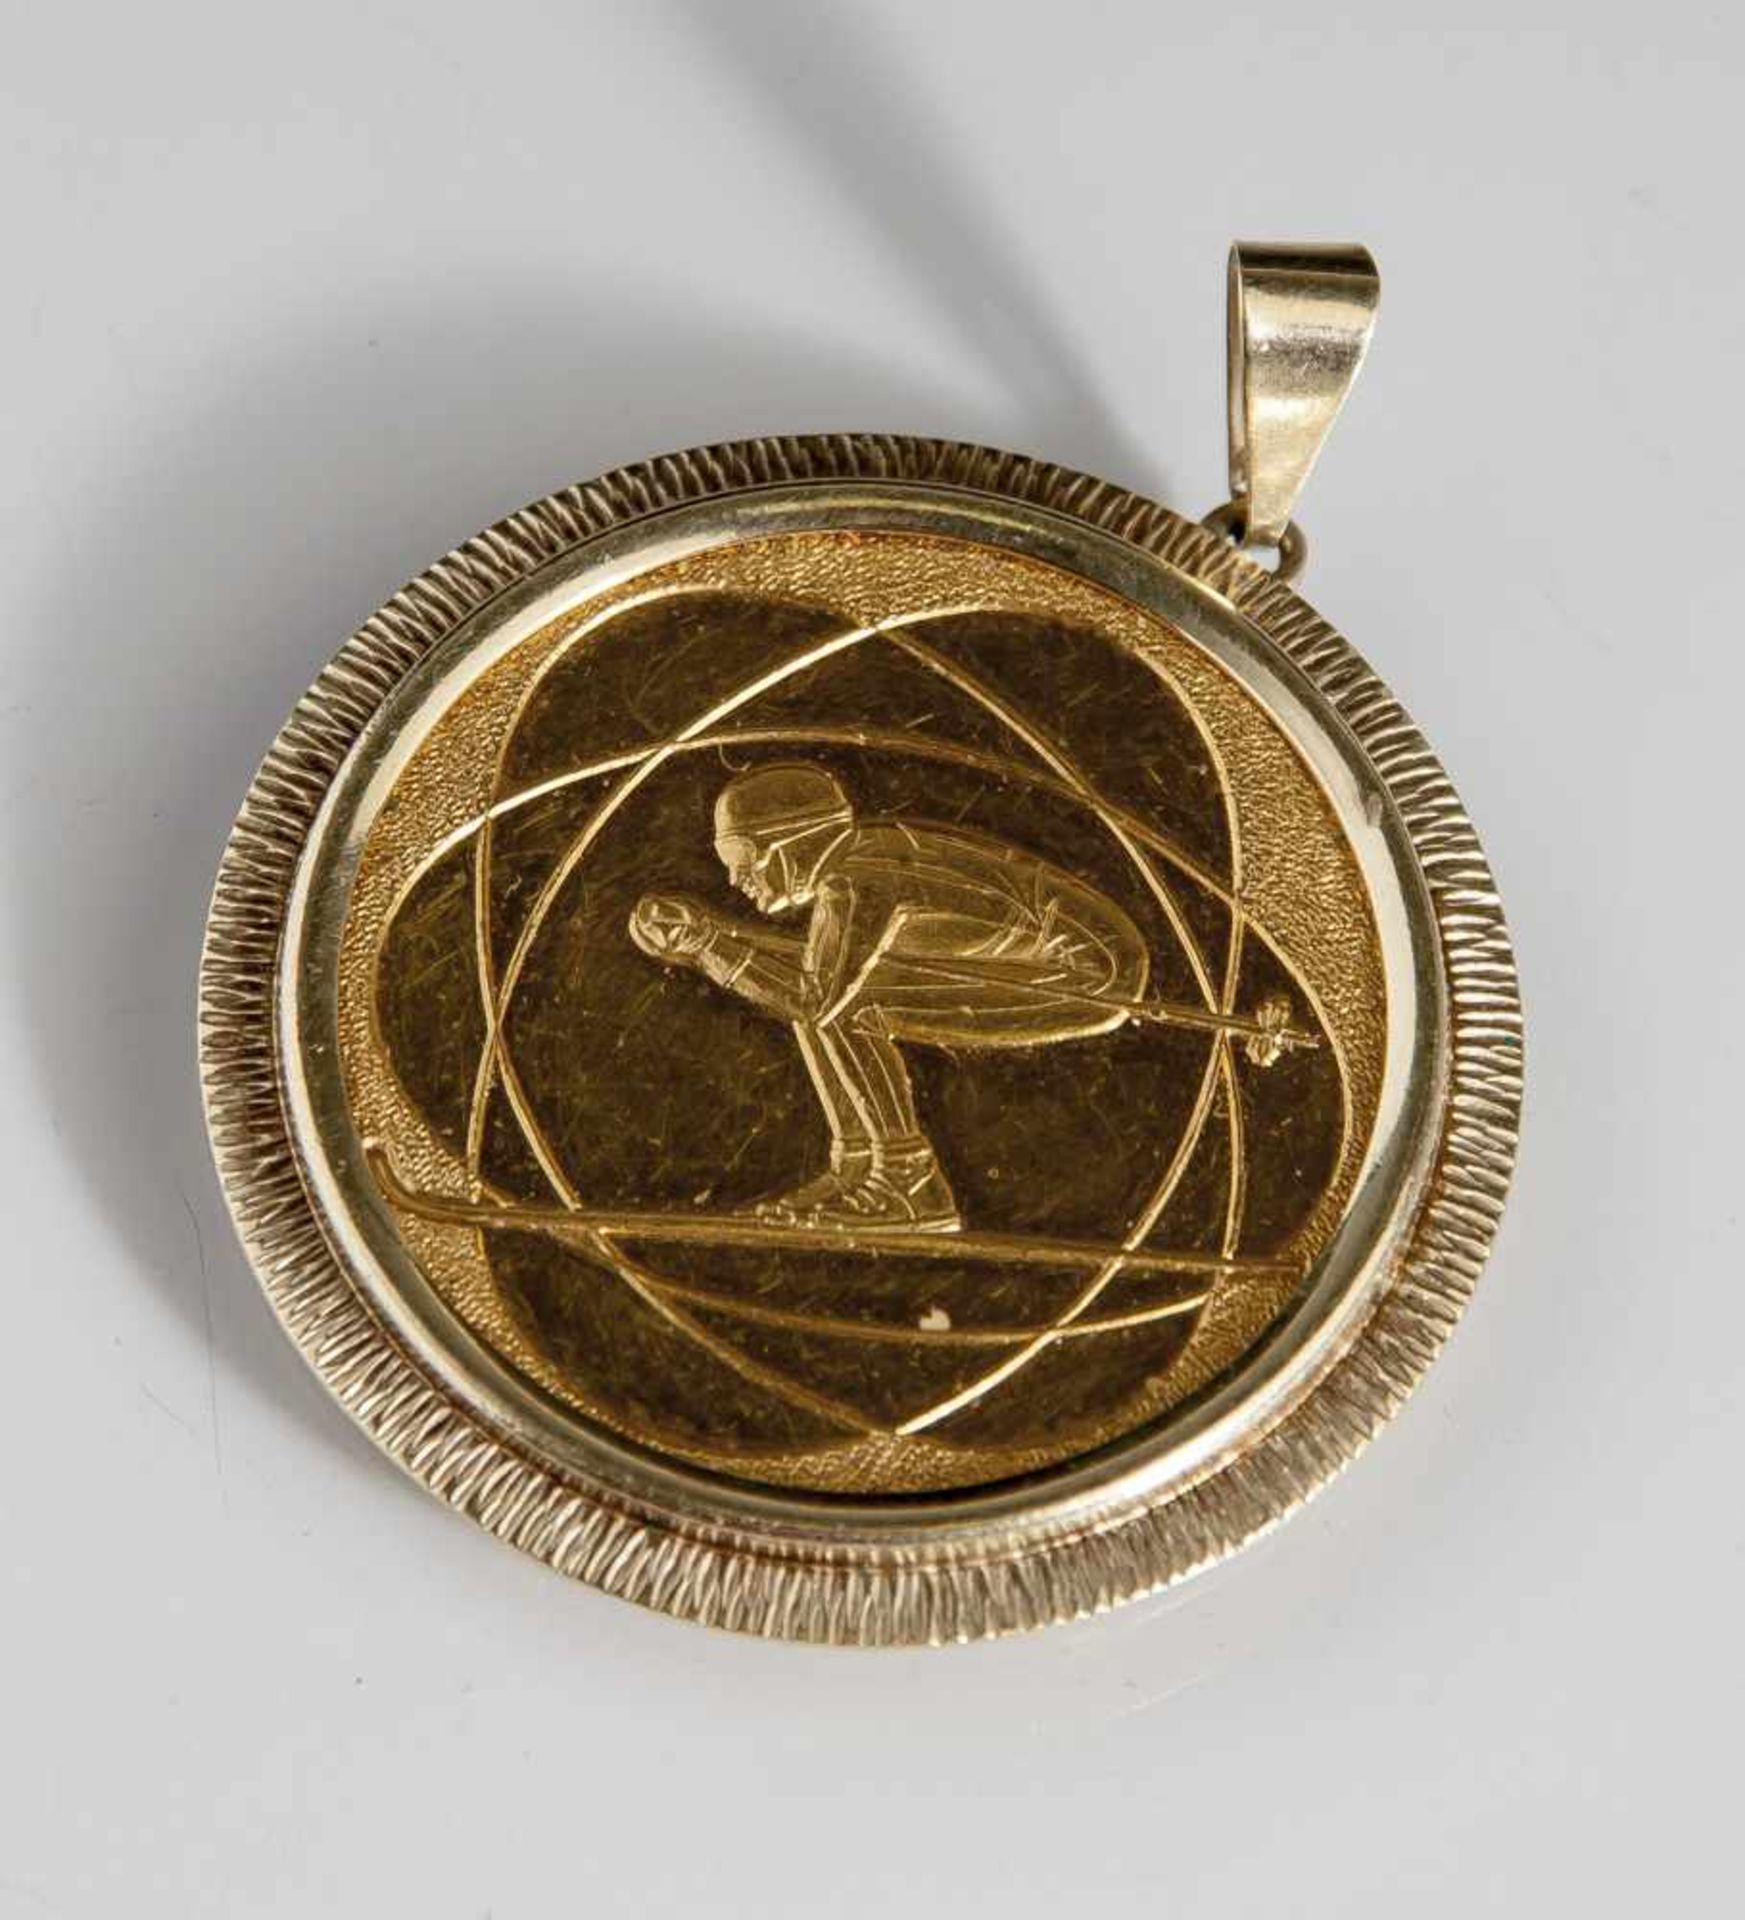 Goldmedaille, Jeux Olimpiques D'hiver Grenoble 1968, 999/1000, 1 Unze, DM. 33,9 mm, in Gelbgold-